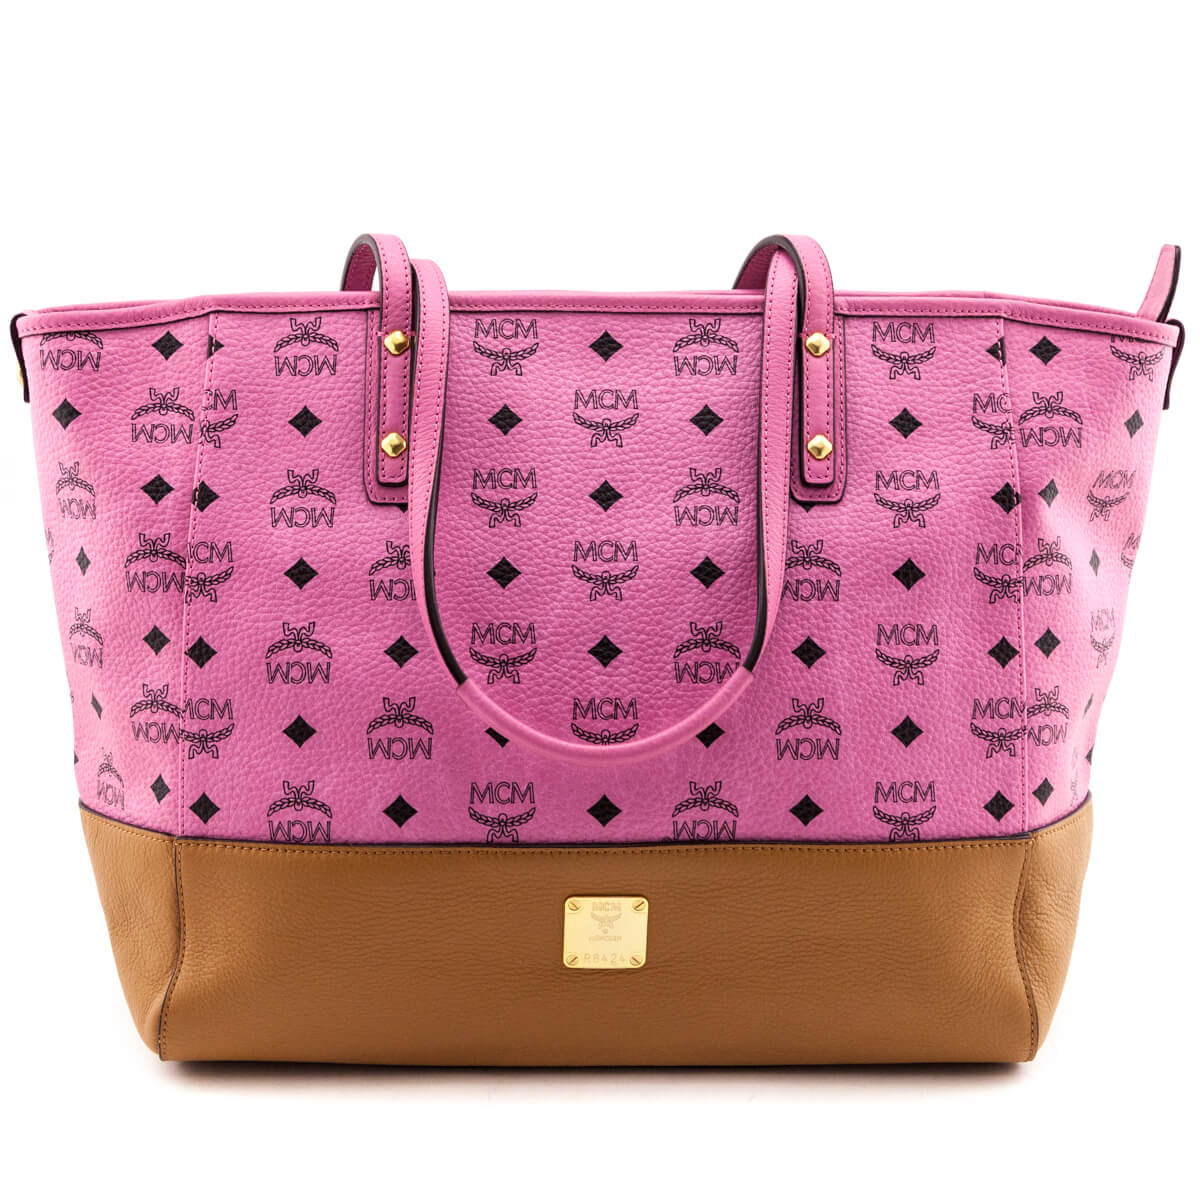 MCM Pink & Cognac Visetos Printed Tote Bag - Love that Bag etc - Preowned Authentic Designer Handbags & Preloved Fashions